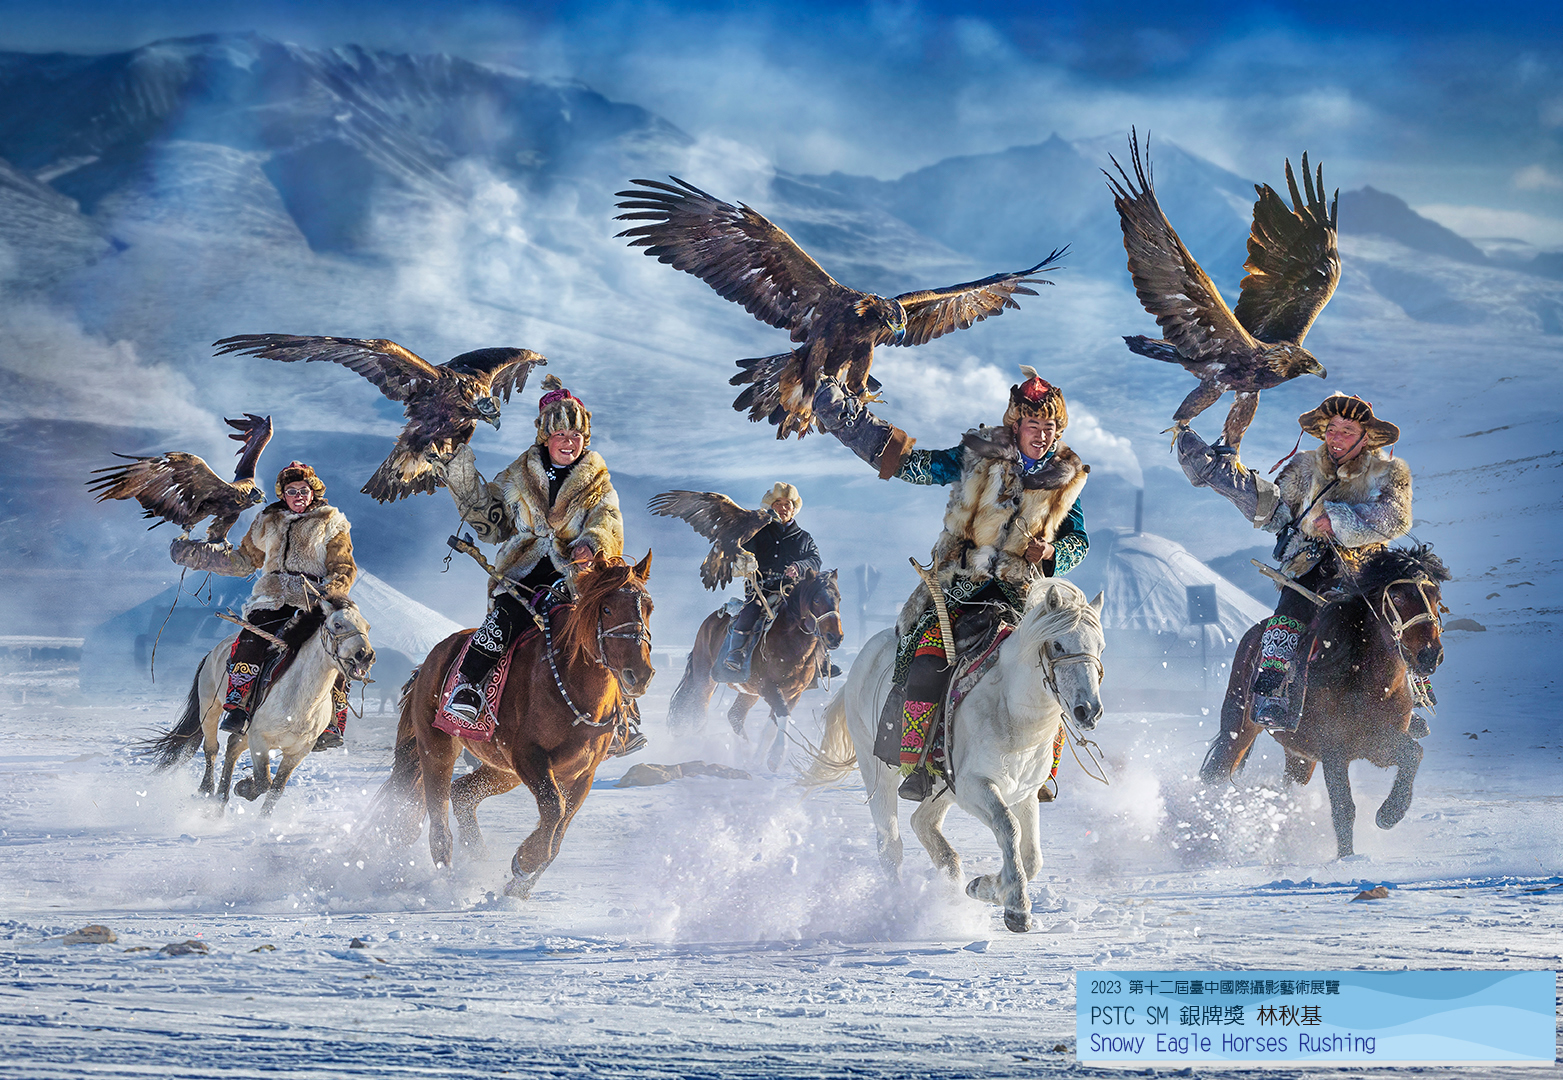 PSTC SM 銀牌獎 林秋基 Snowy Eagle Horses Rushing